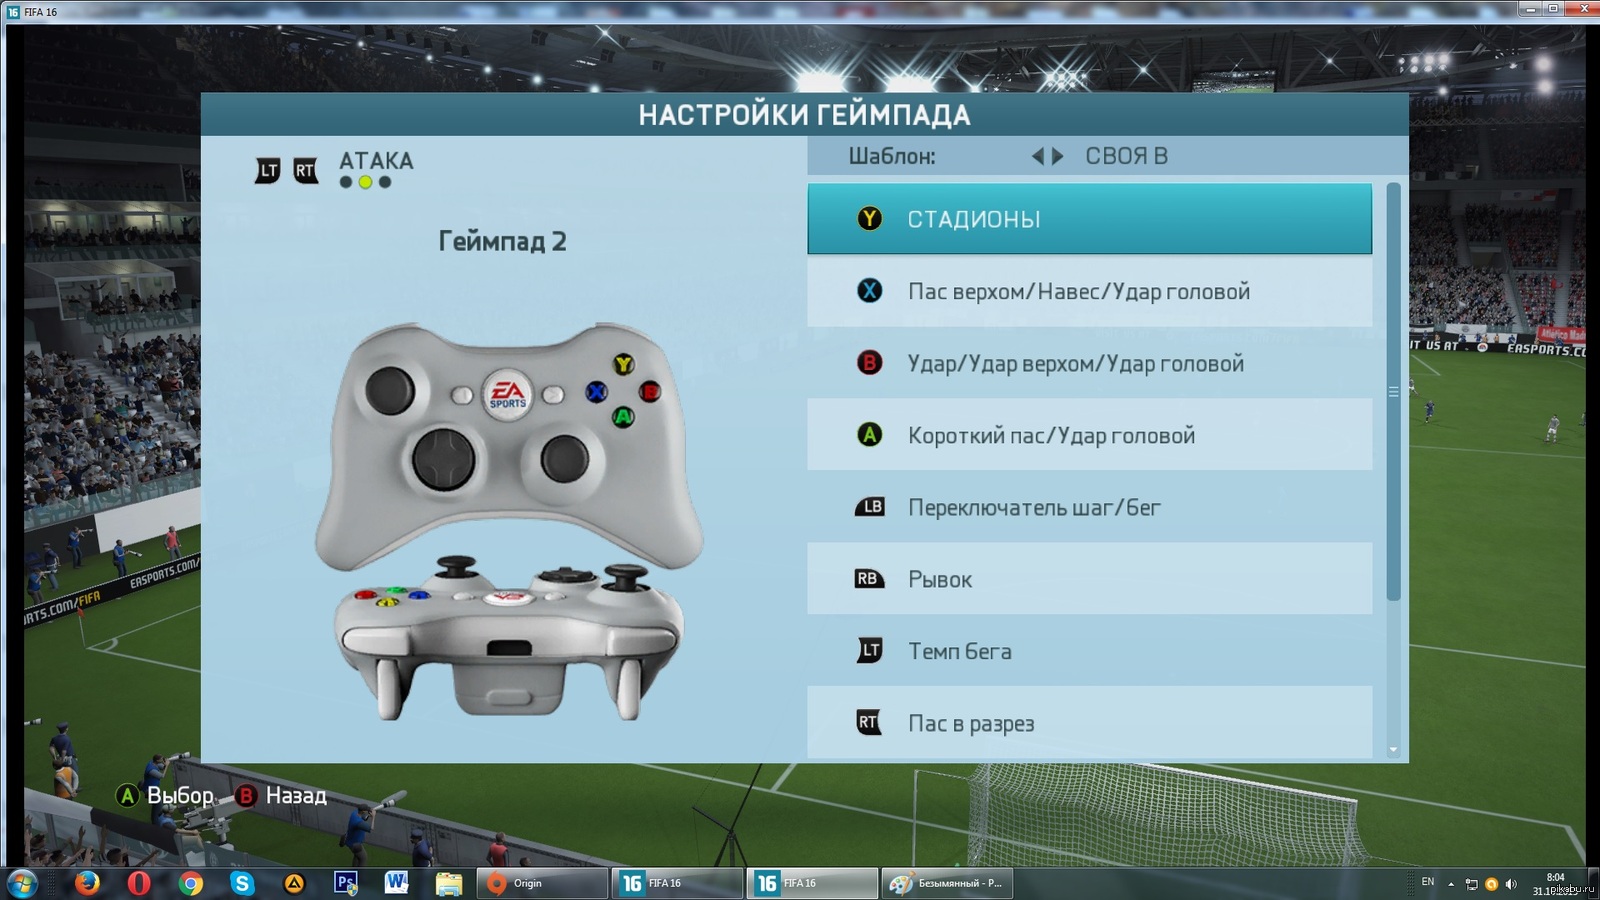 Настройка fifa. Управление ФИФА 19 на джойстике Xbox 360. ФИФА управление на джойстике Xbox. Управление ФИФА 15 джойстик на Xbox. FIFA 22 управление на джойстике Xbox.